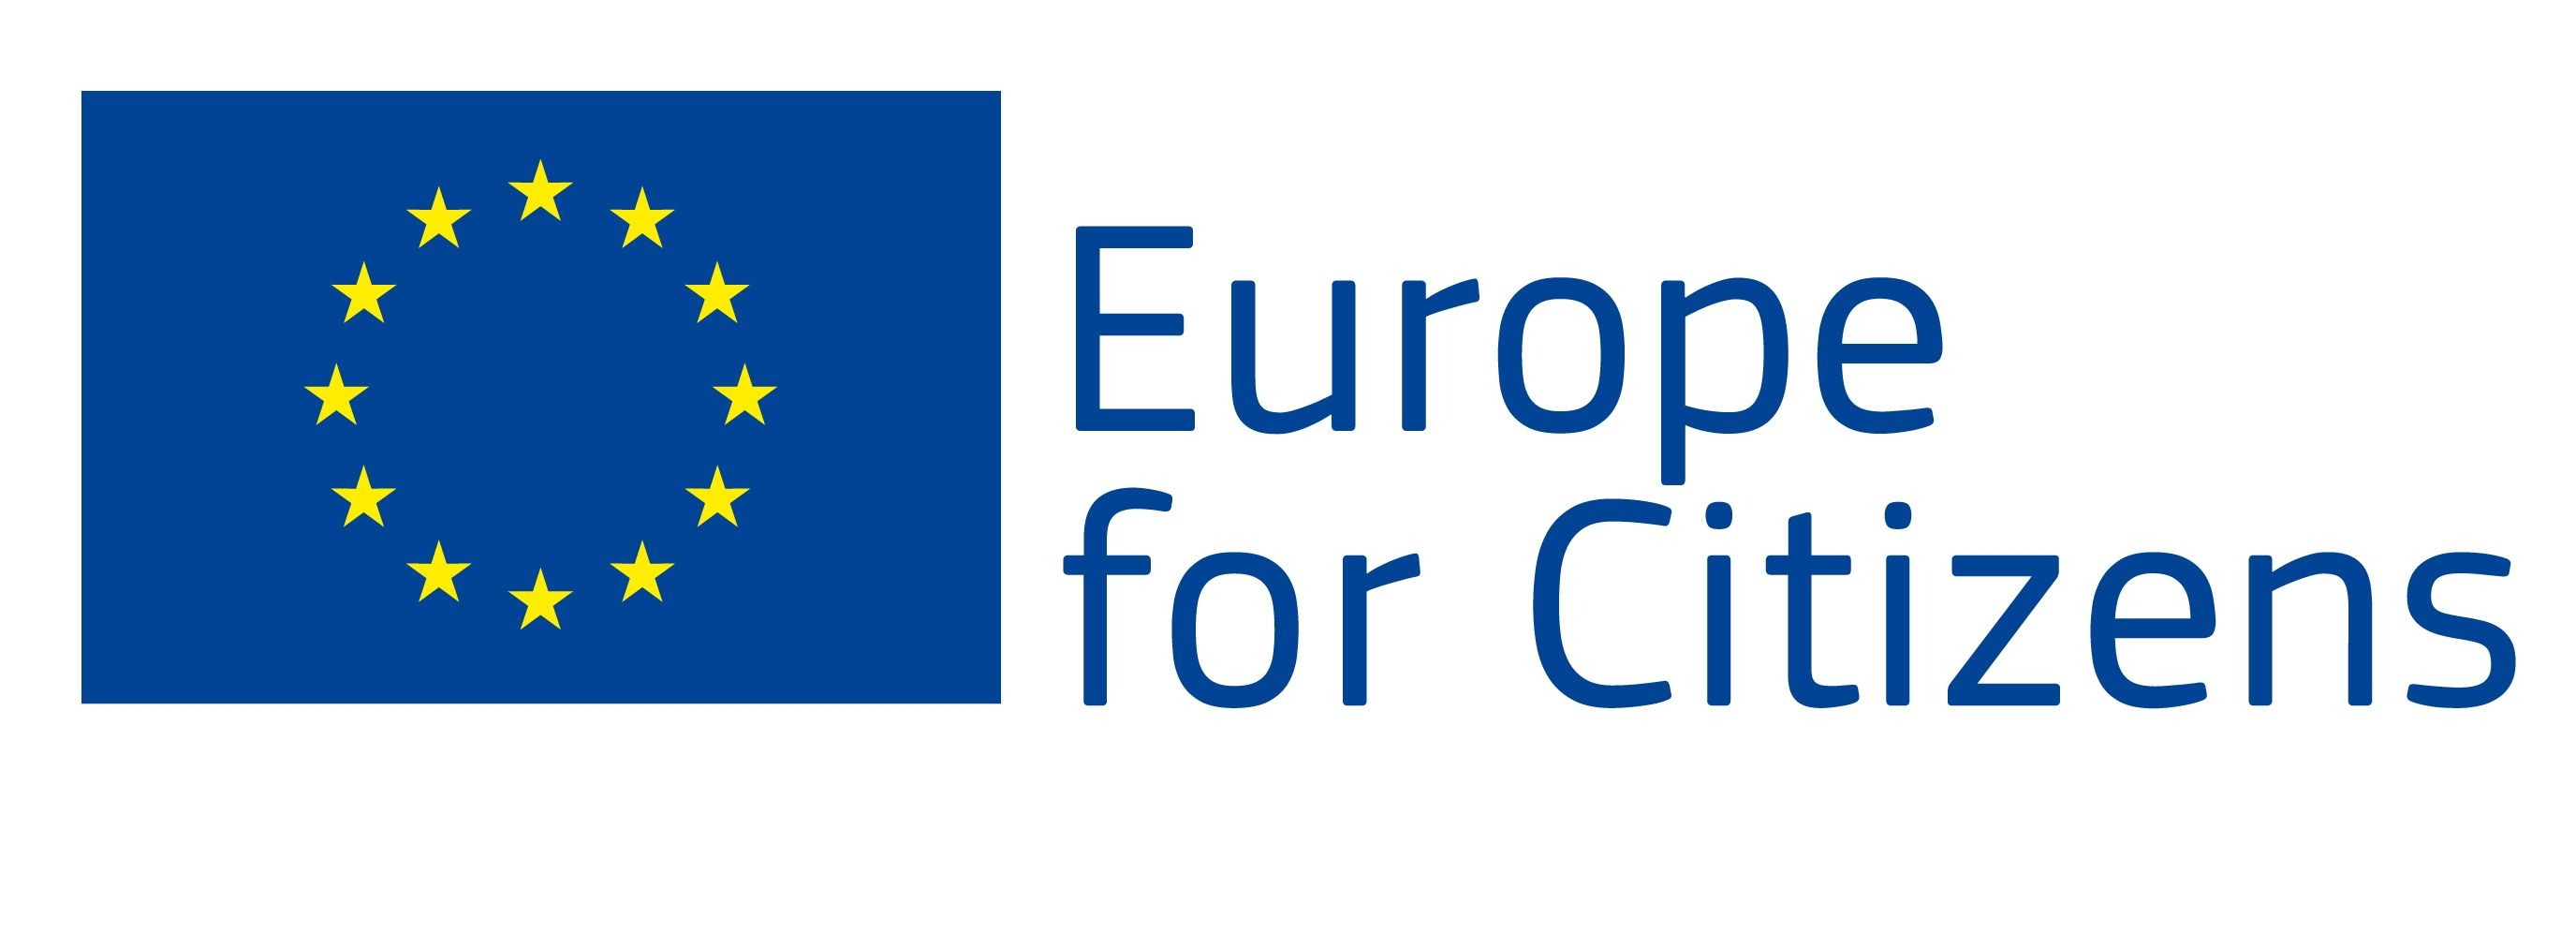 https://www.tuchow.pl/wp-content/uploads/2014/08/eu_flag_europe_for_citizens_en.jpg